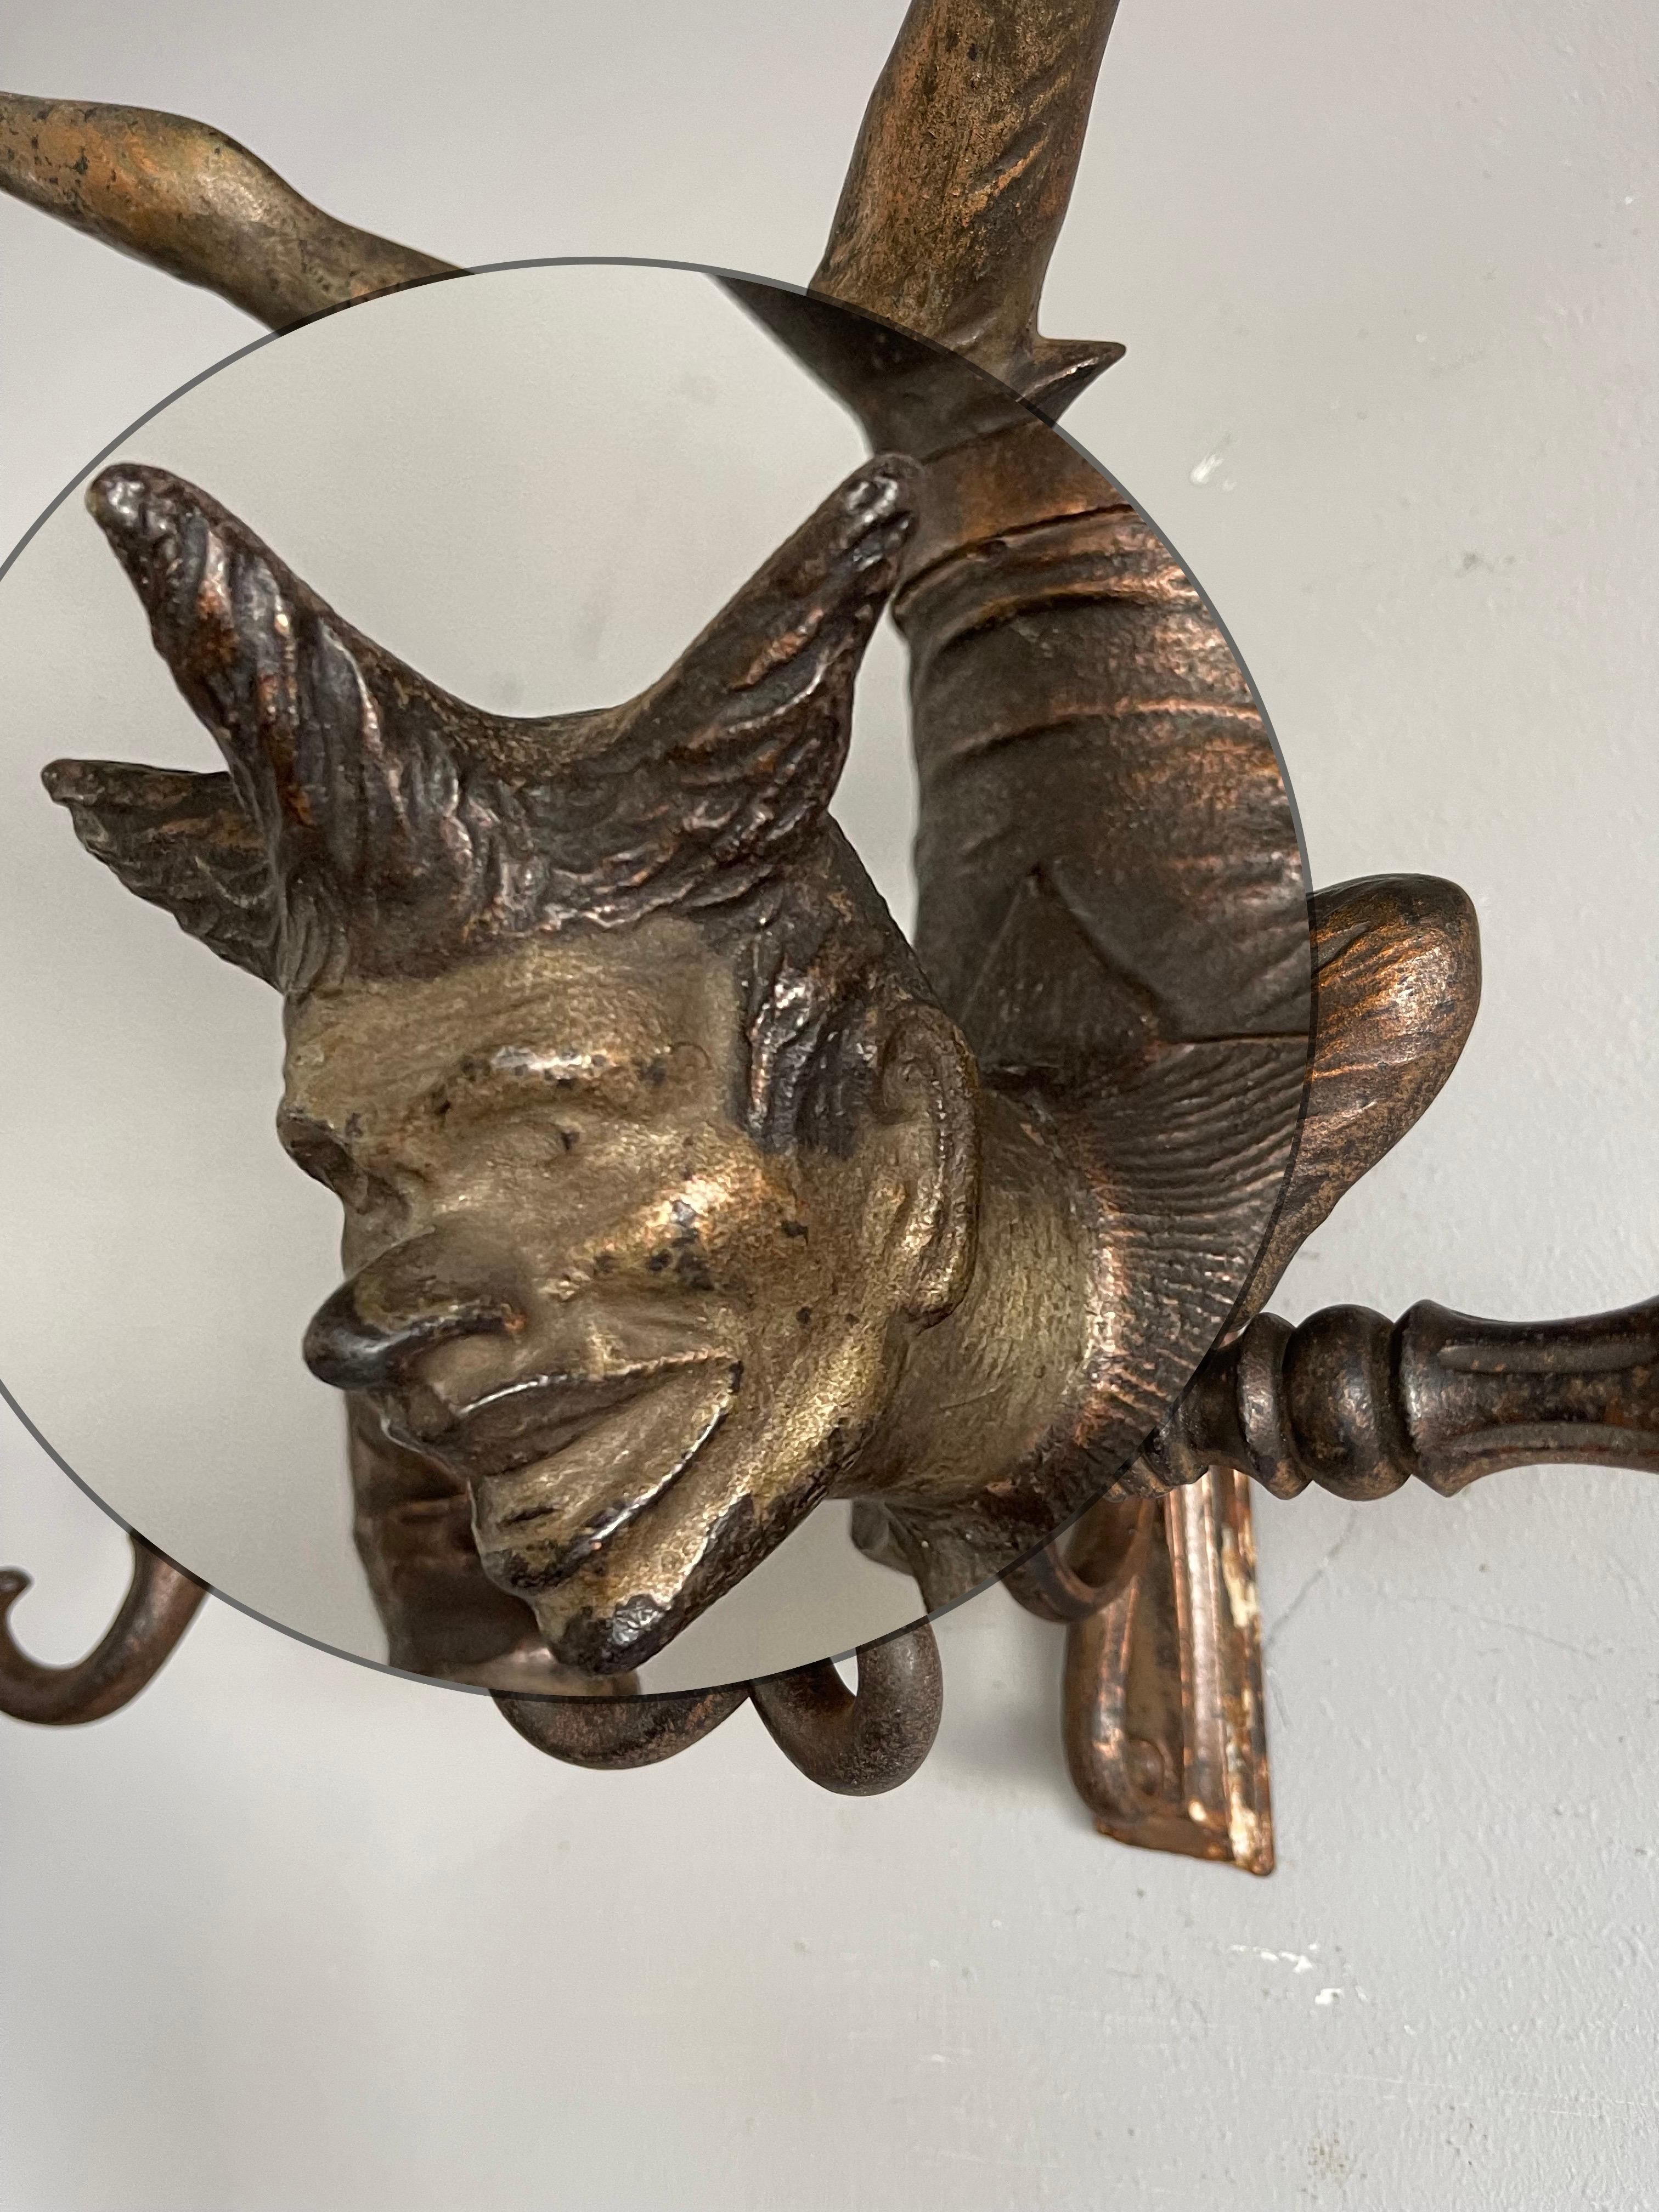 20th Century Antique Bronzed Iron Wall Key or Coat Rack w. Acrobatic Jester Figure, Great Fun